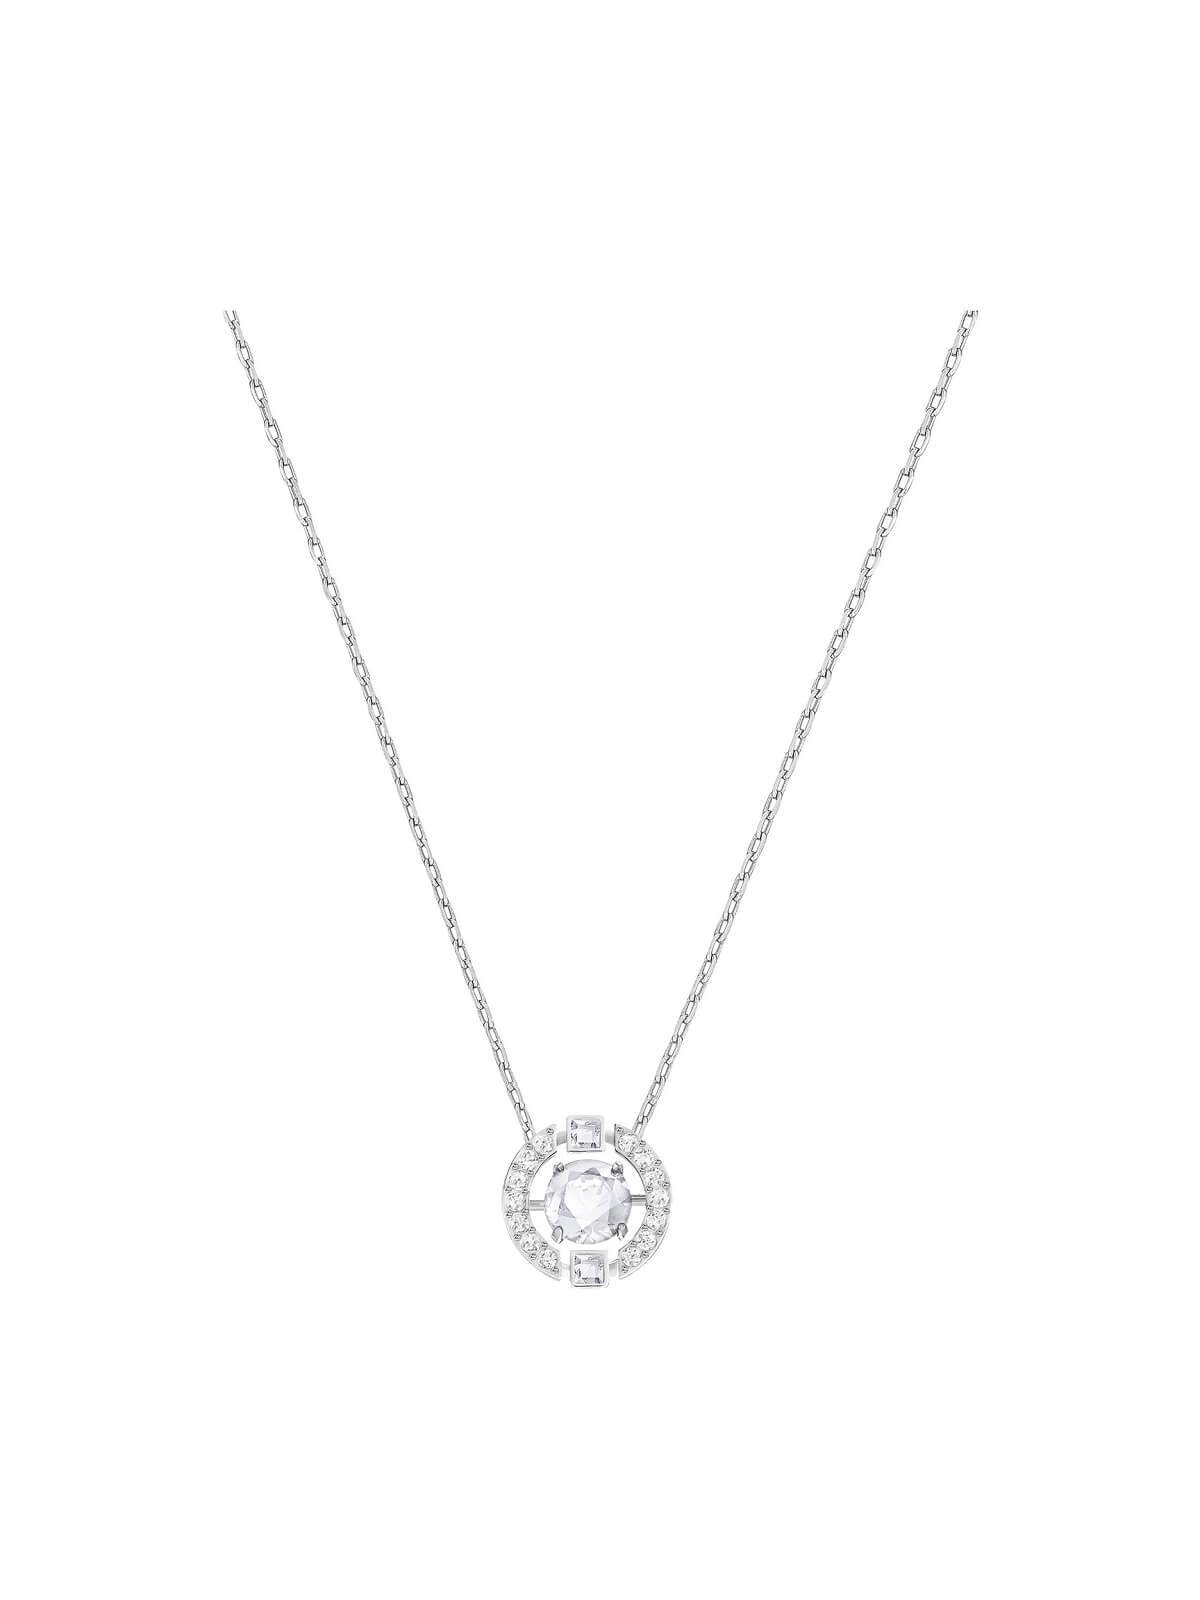 Swarovski Sparkling Dance White Crystal Necklace 5286137